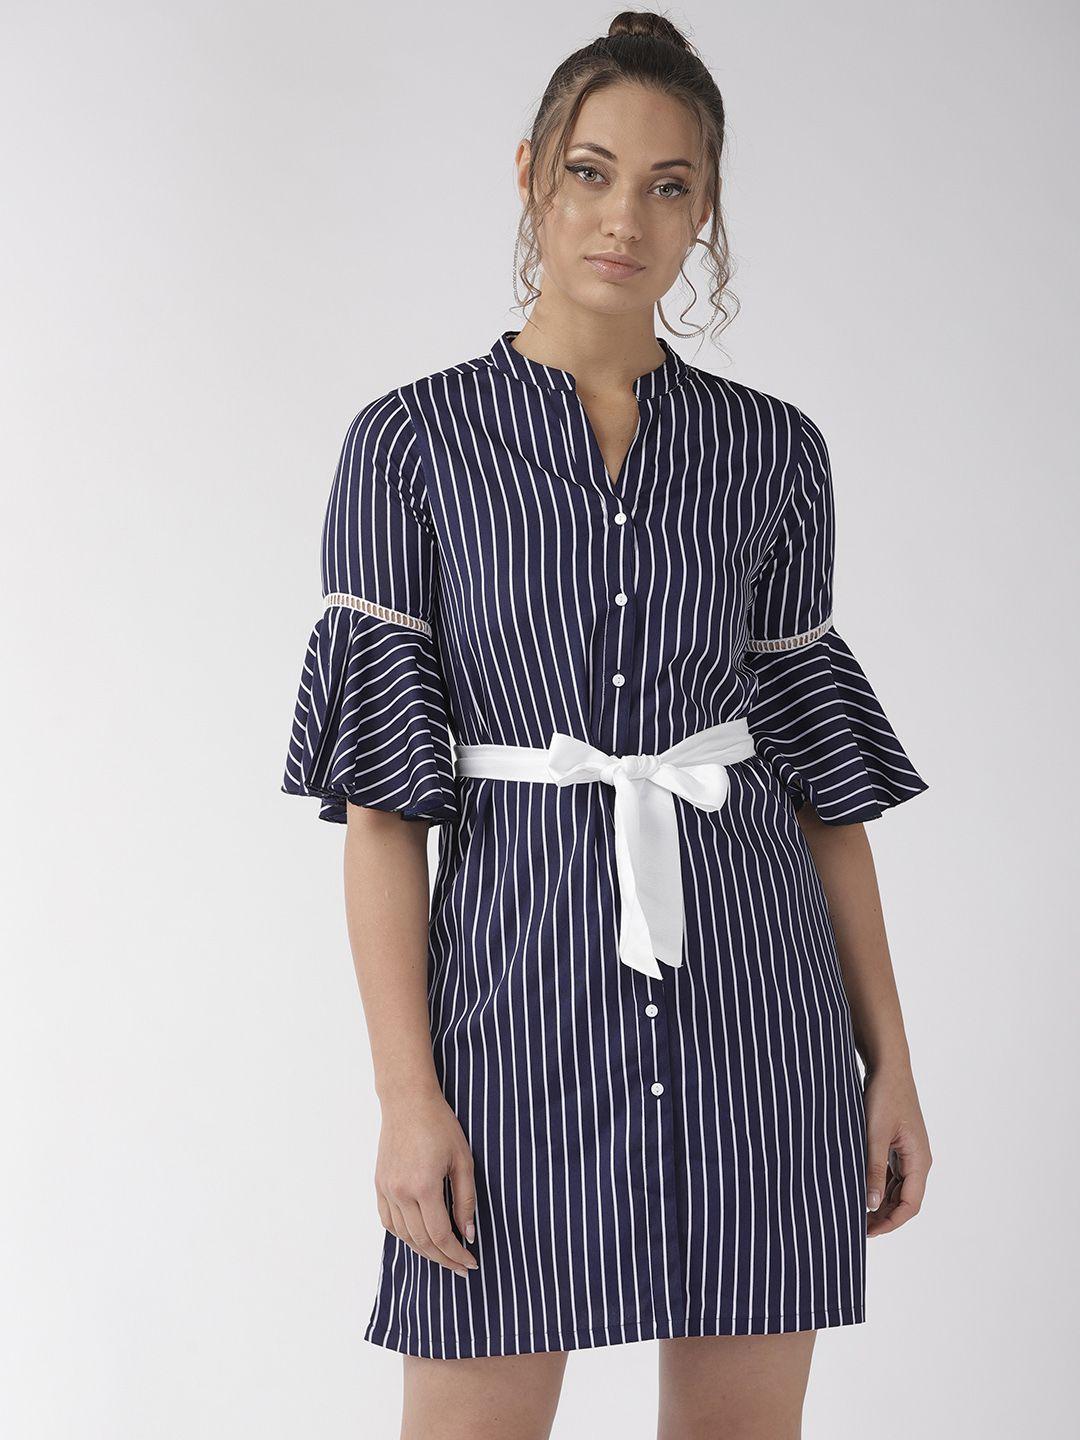 style quotient women navy blue striped a-line dress